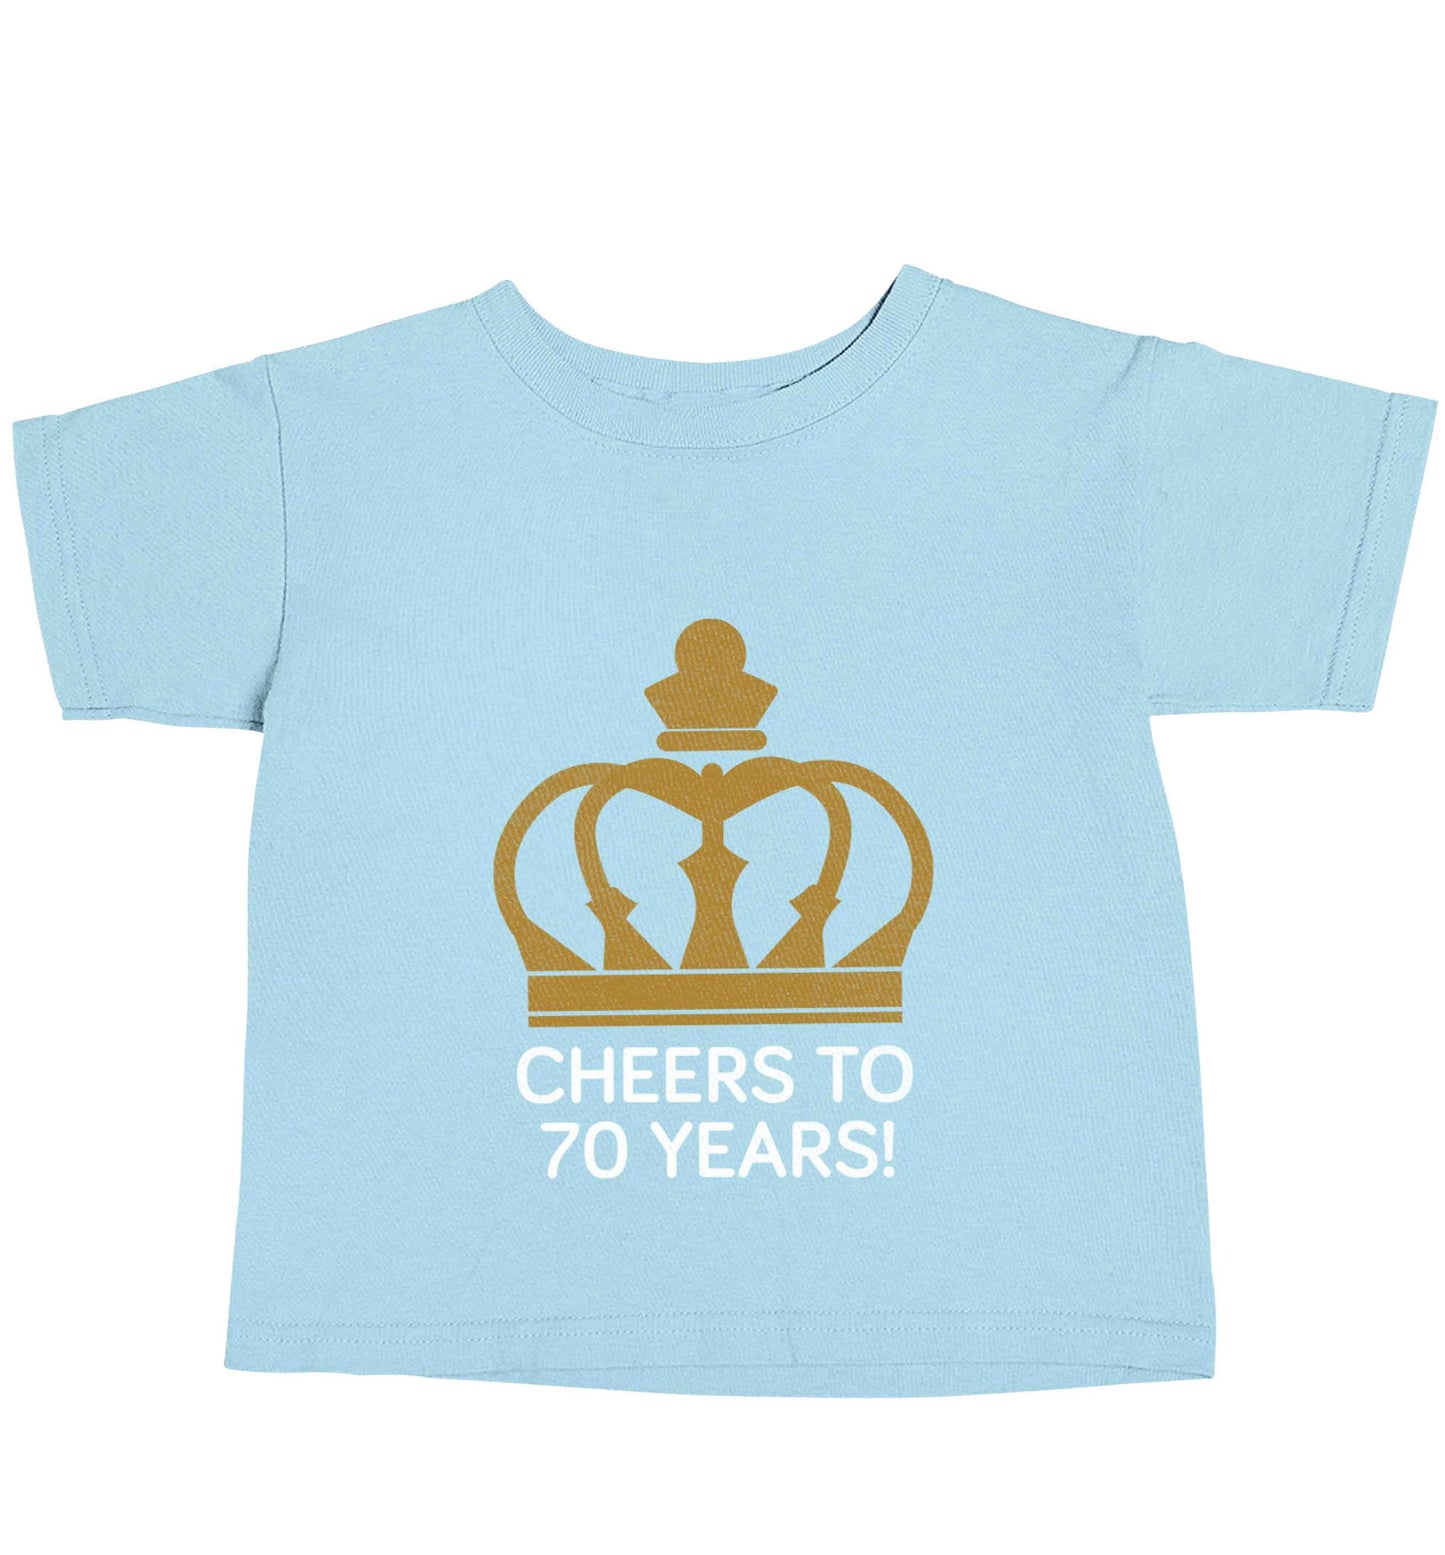 Cheers to 70 years! light blue baby toddler Tshirt 2 Years